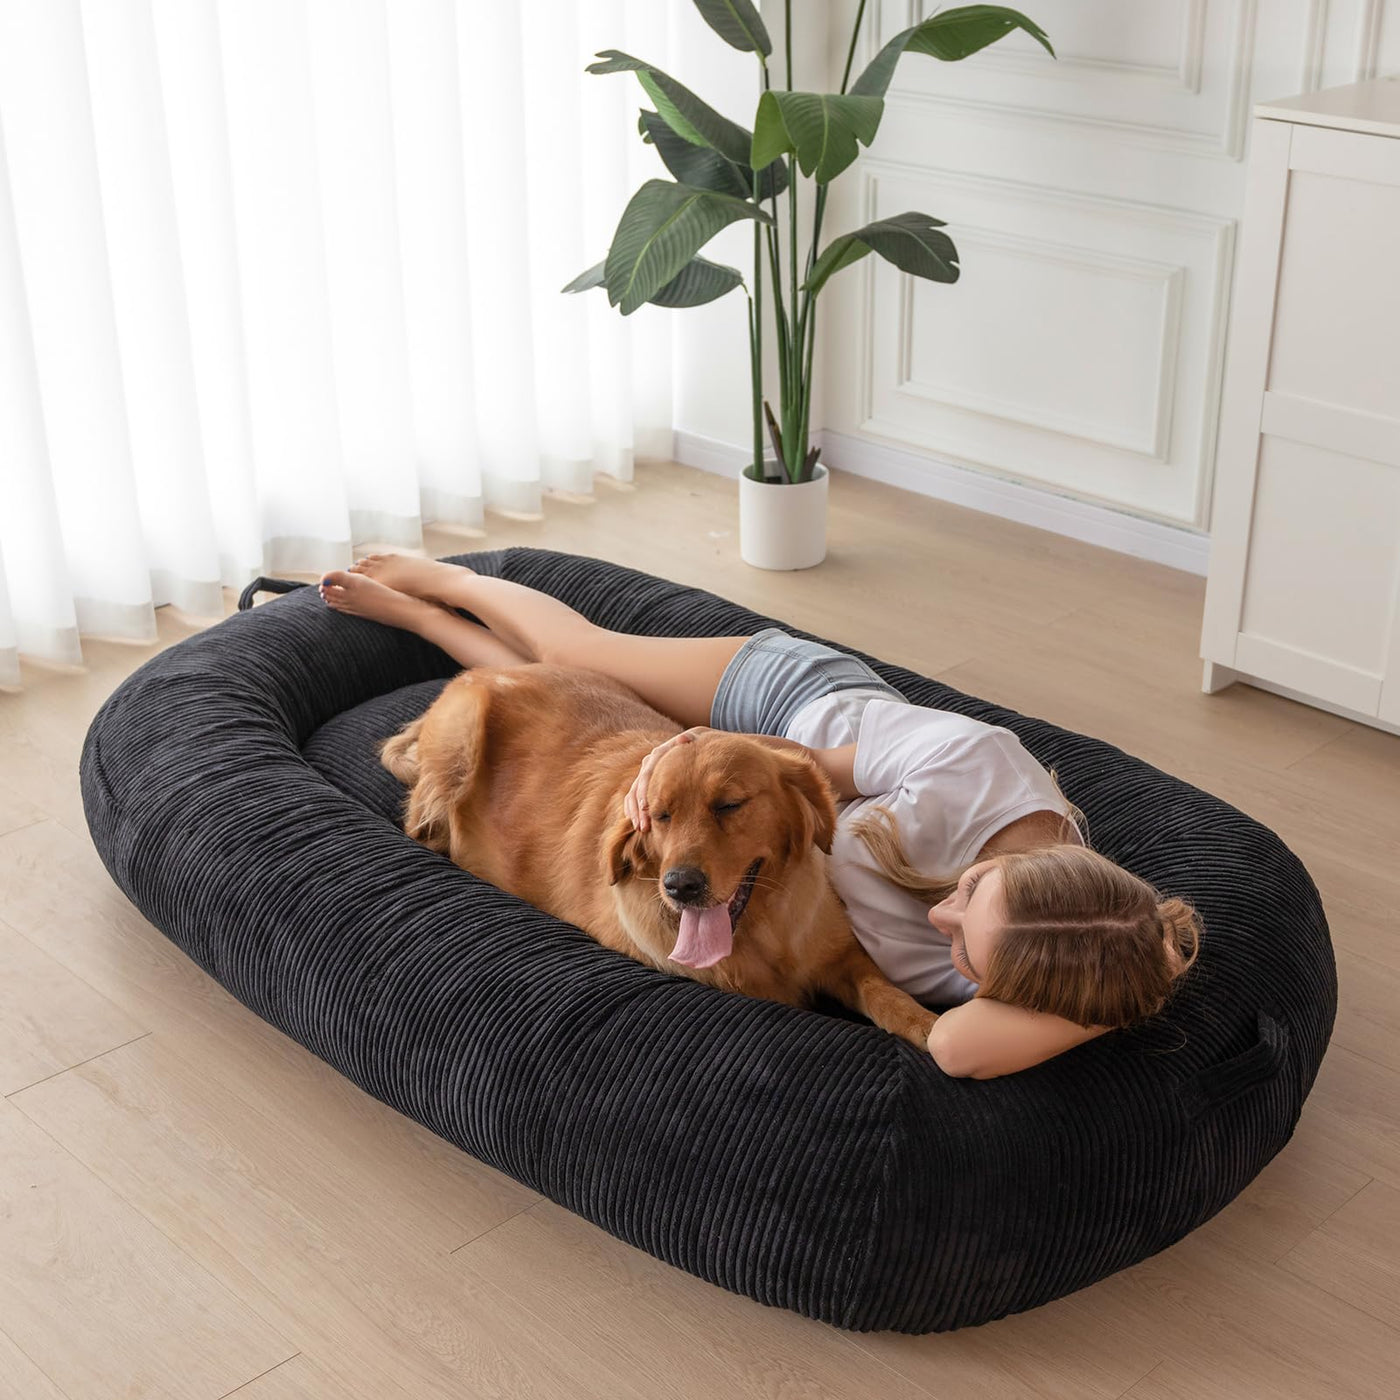 MAXYOYO Human Dog Bed, Corduroy Giant Bean Bag Dog Bed for Humans and Pets, Black